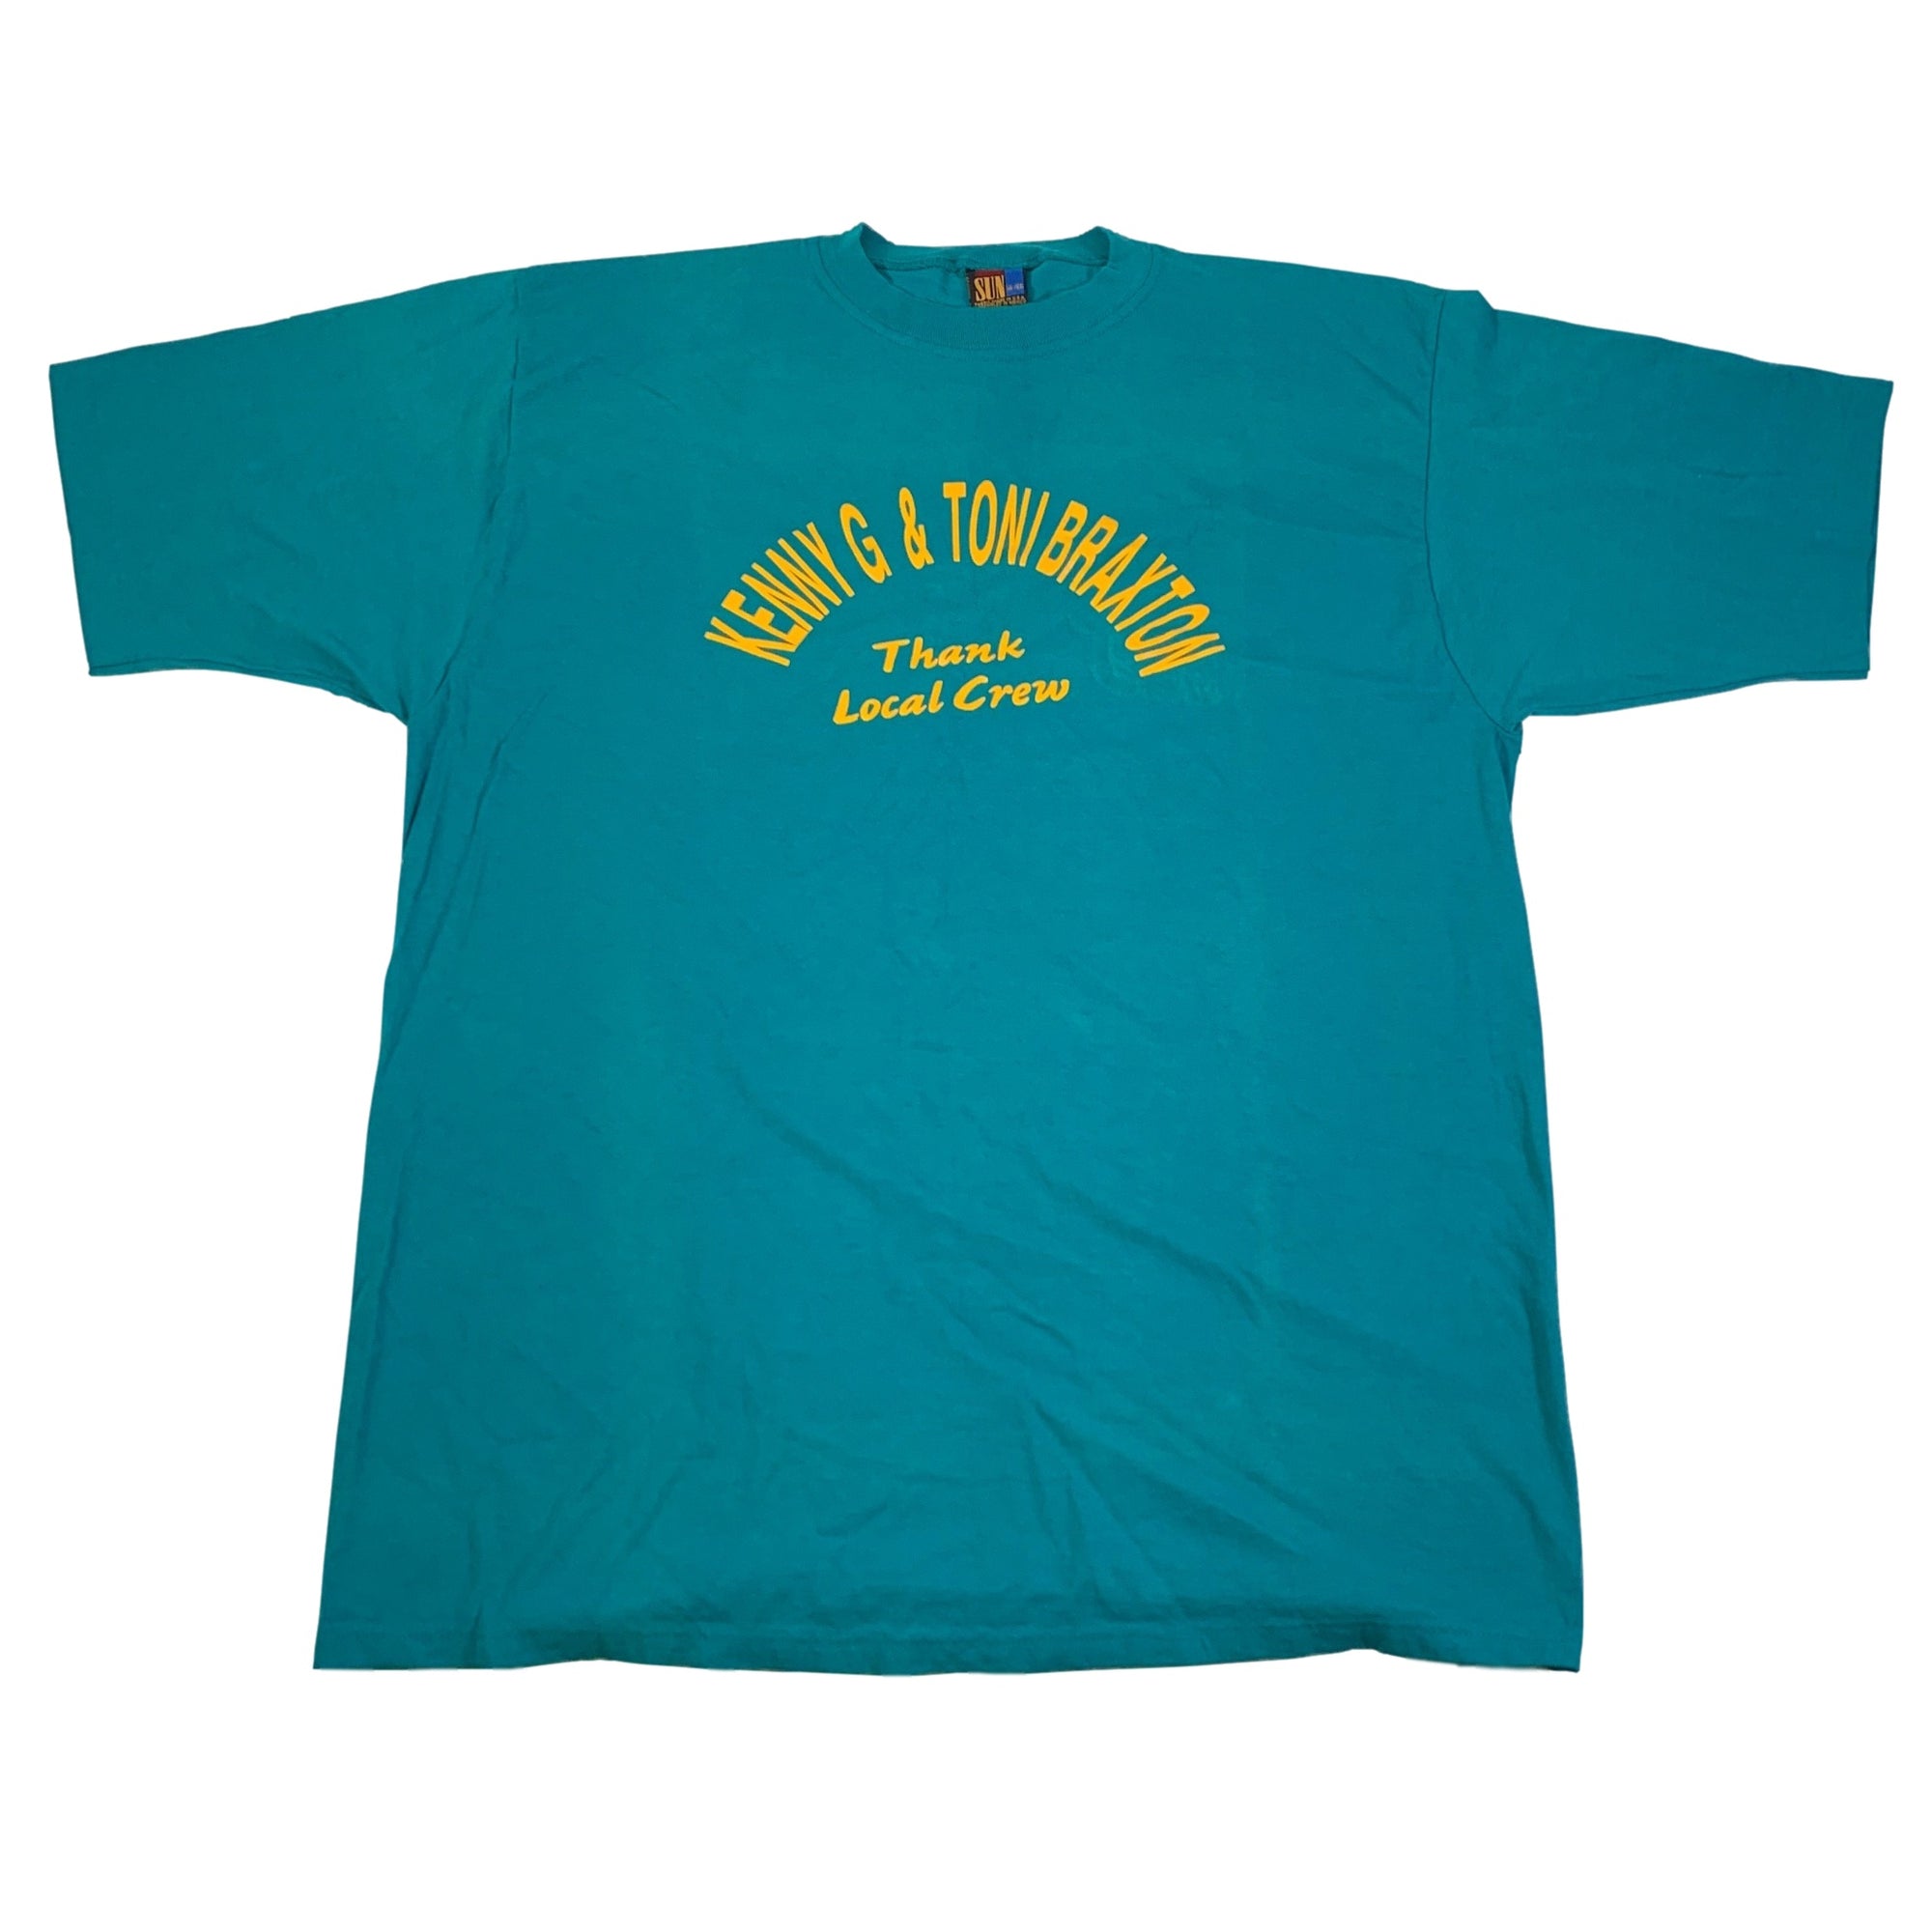 Vintage Kenny G Toni Braxton "Local Crew" T-Shirt - jointcustodydc